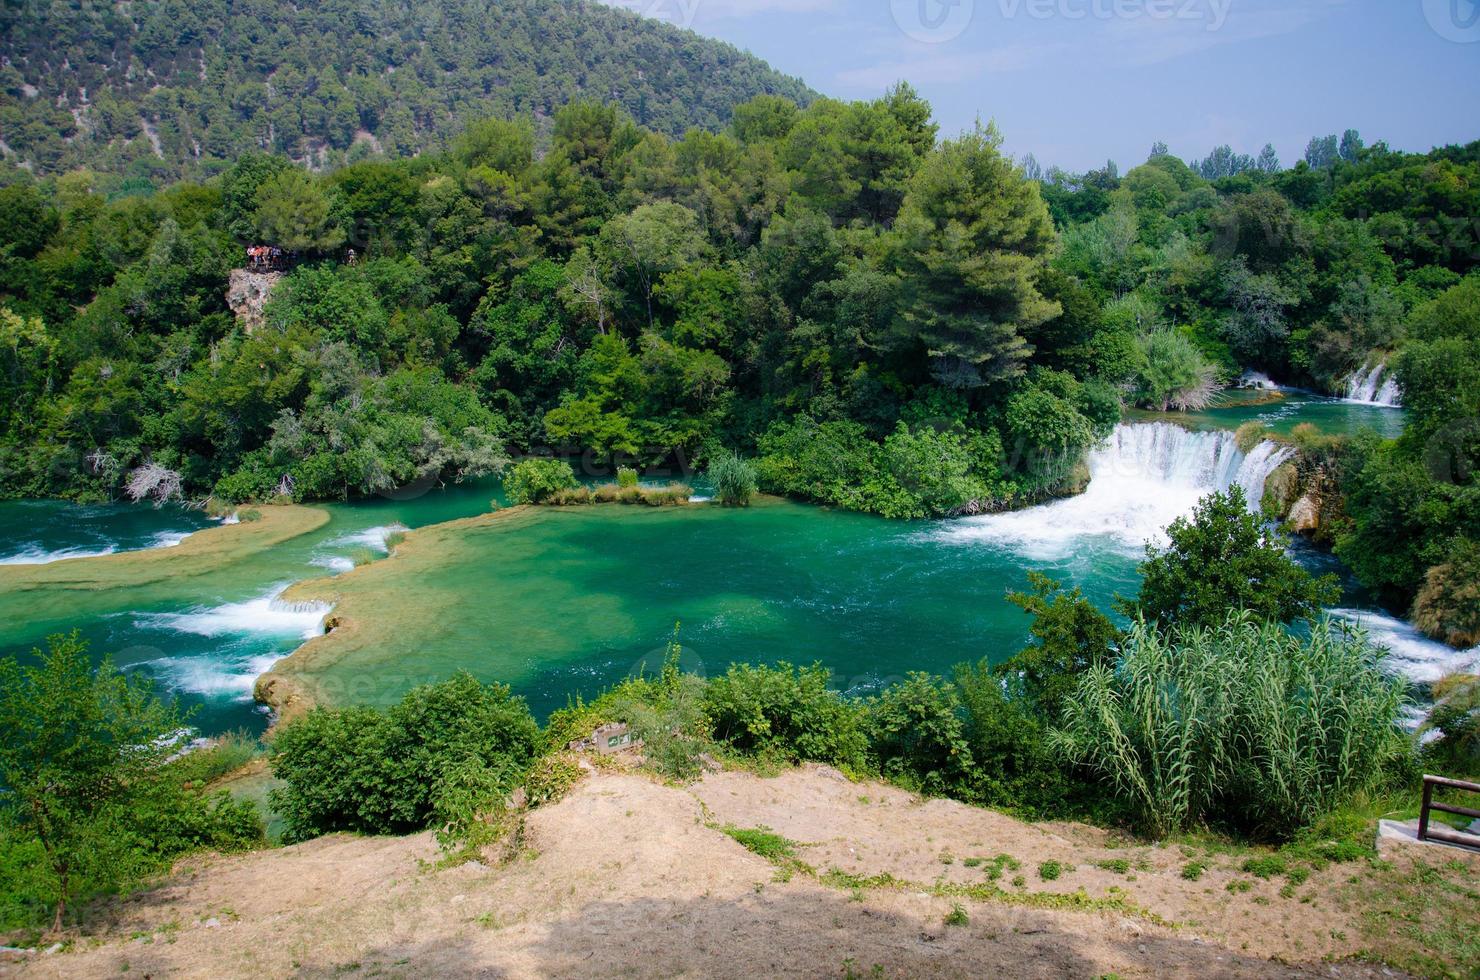 Waterfalls among green plants in Krka National Park, Dalmatia, Croatia photo